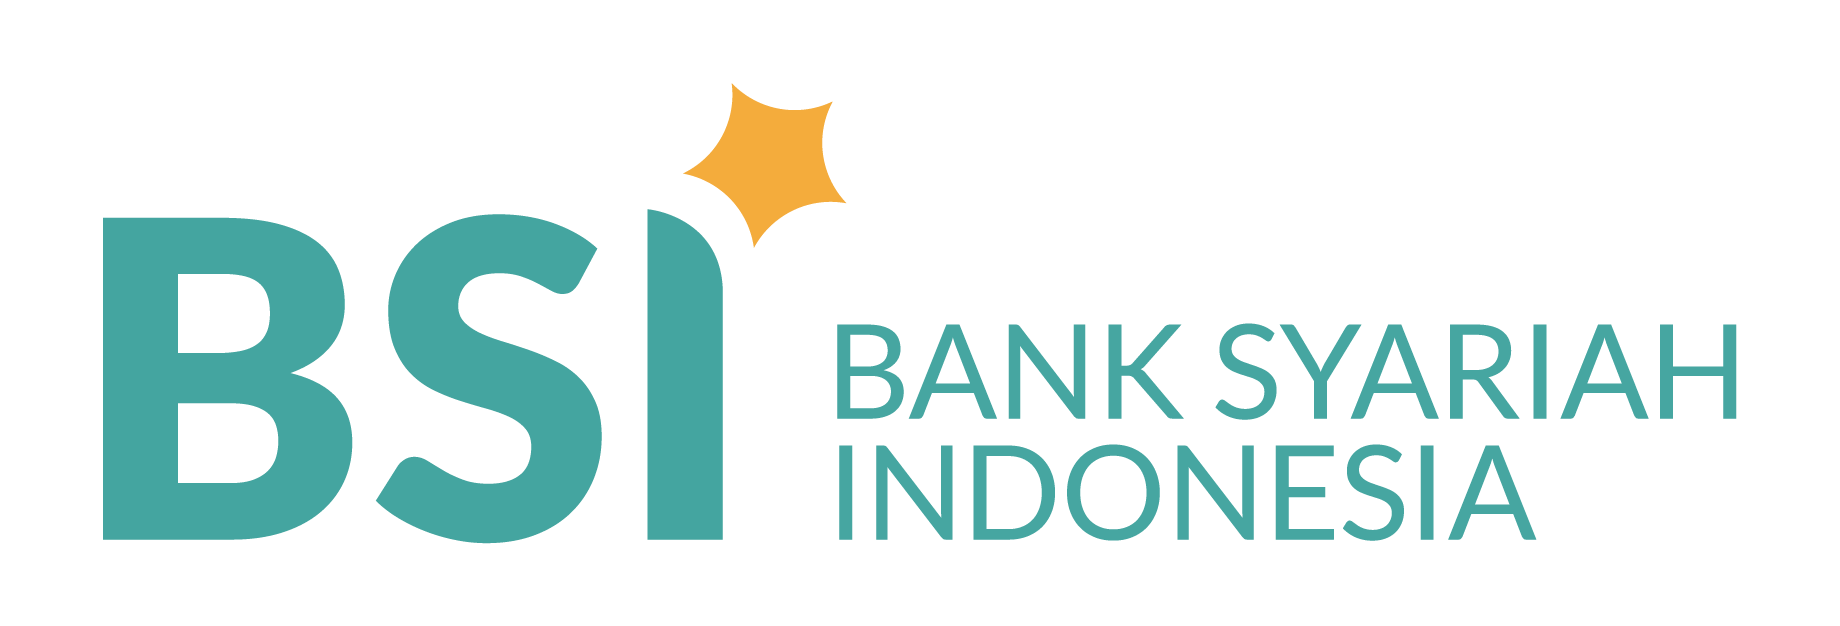 logo-bank-syariah-indonesia